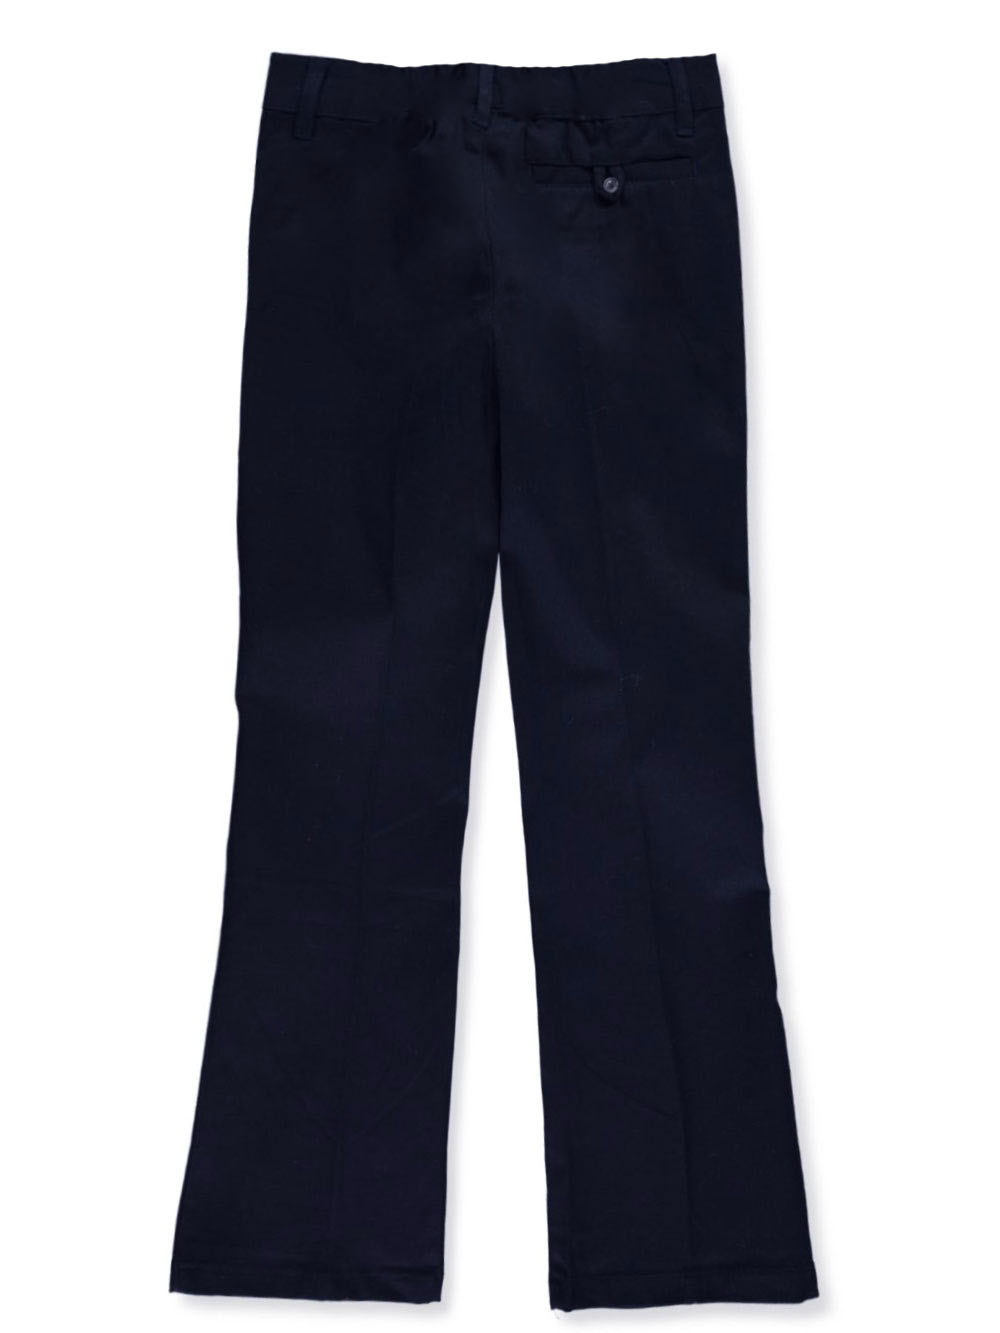 Denice Big Girls' Stretch Uniform Pants (Sizes 7 - 20) | eBay